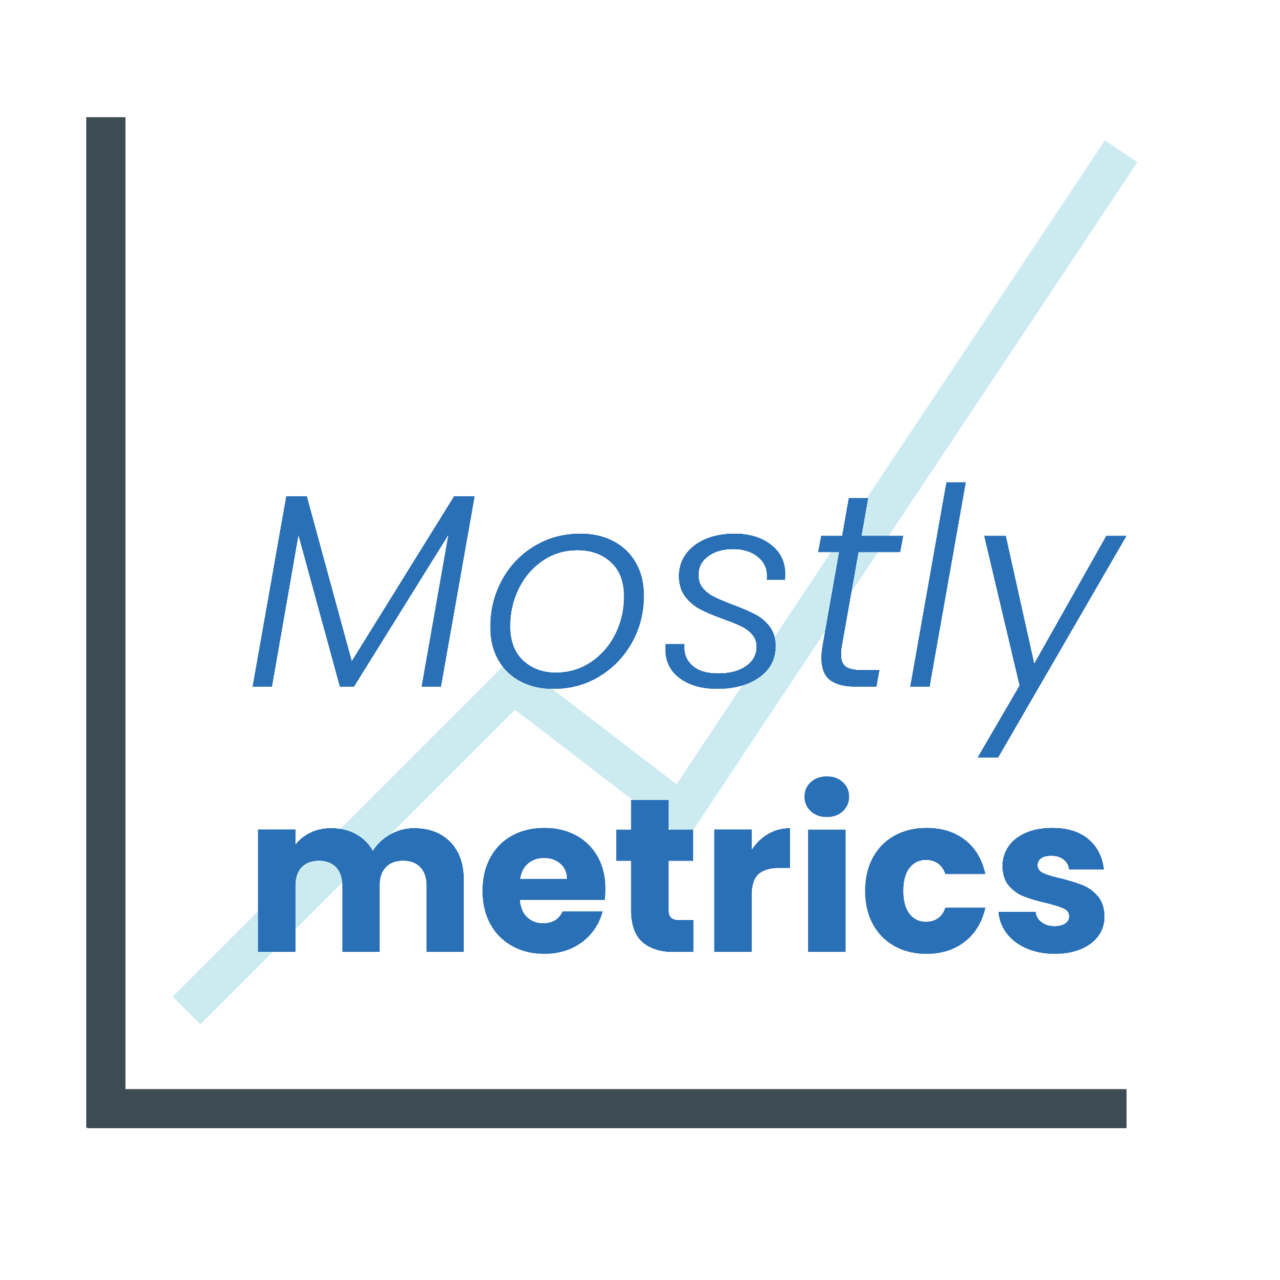 Mostly metrics